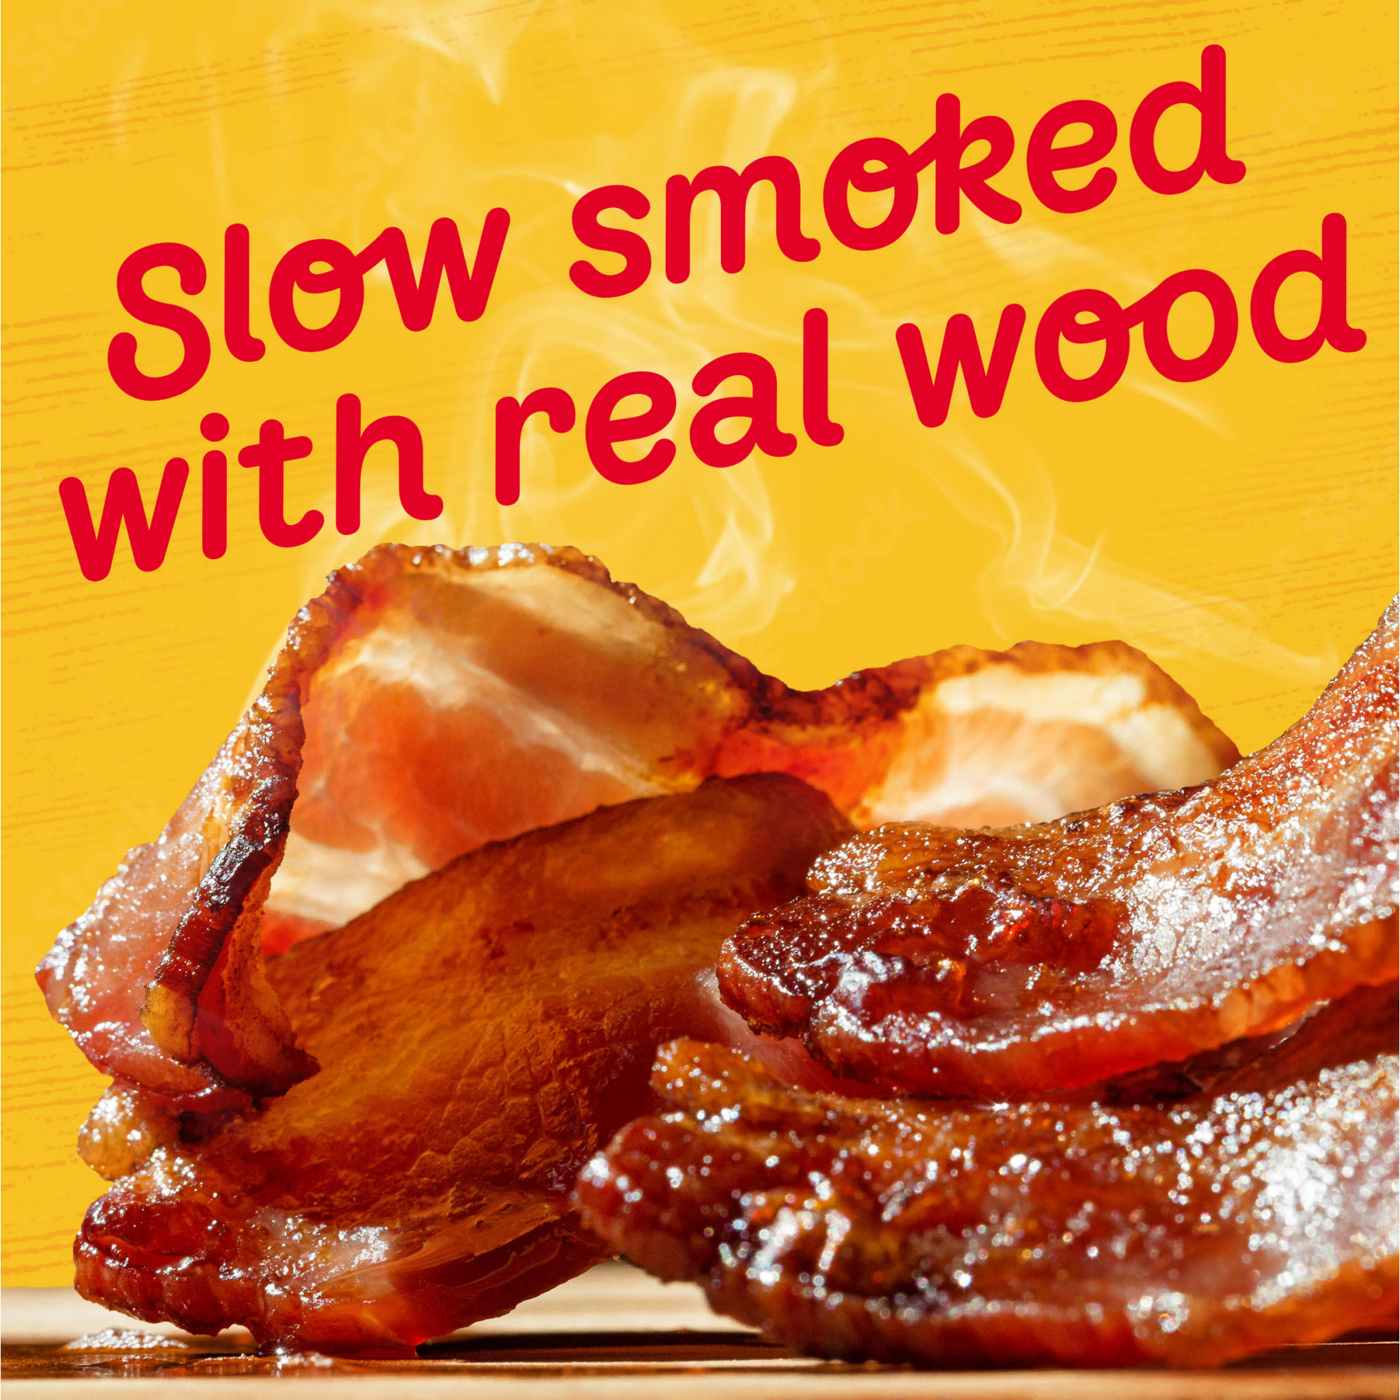 Oscar Mayer Naturally Hardwood Smoked Thick Cut Bacon